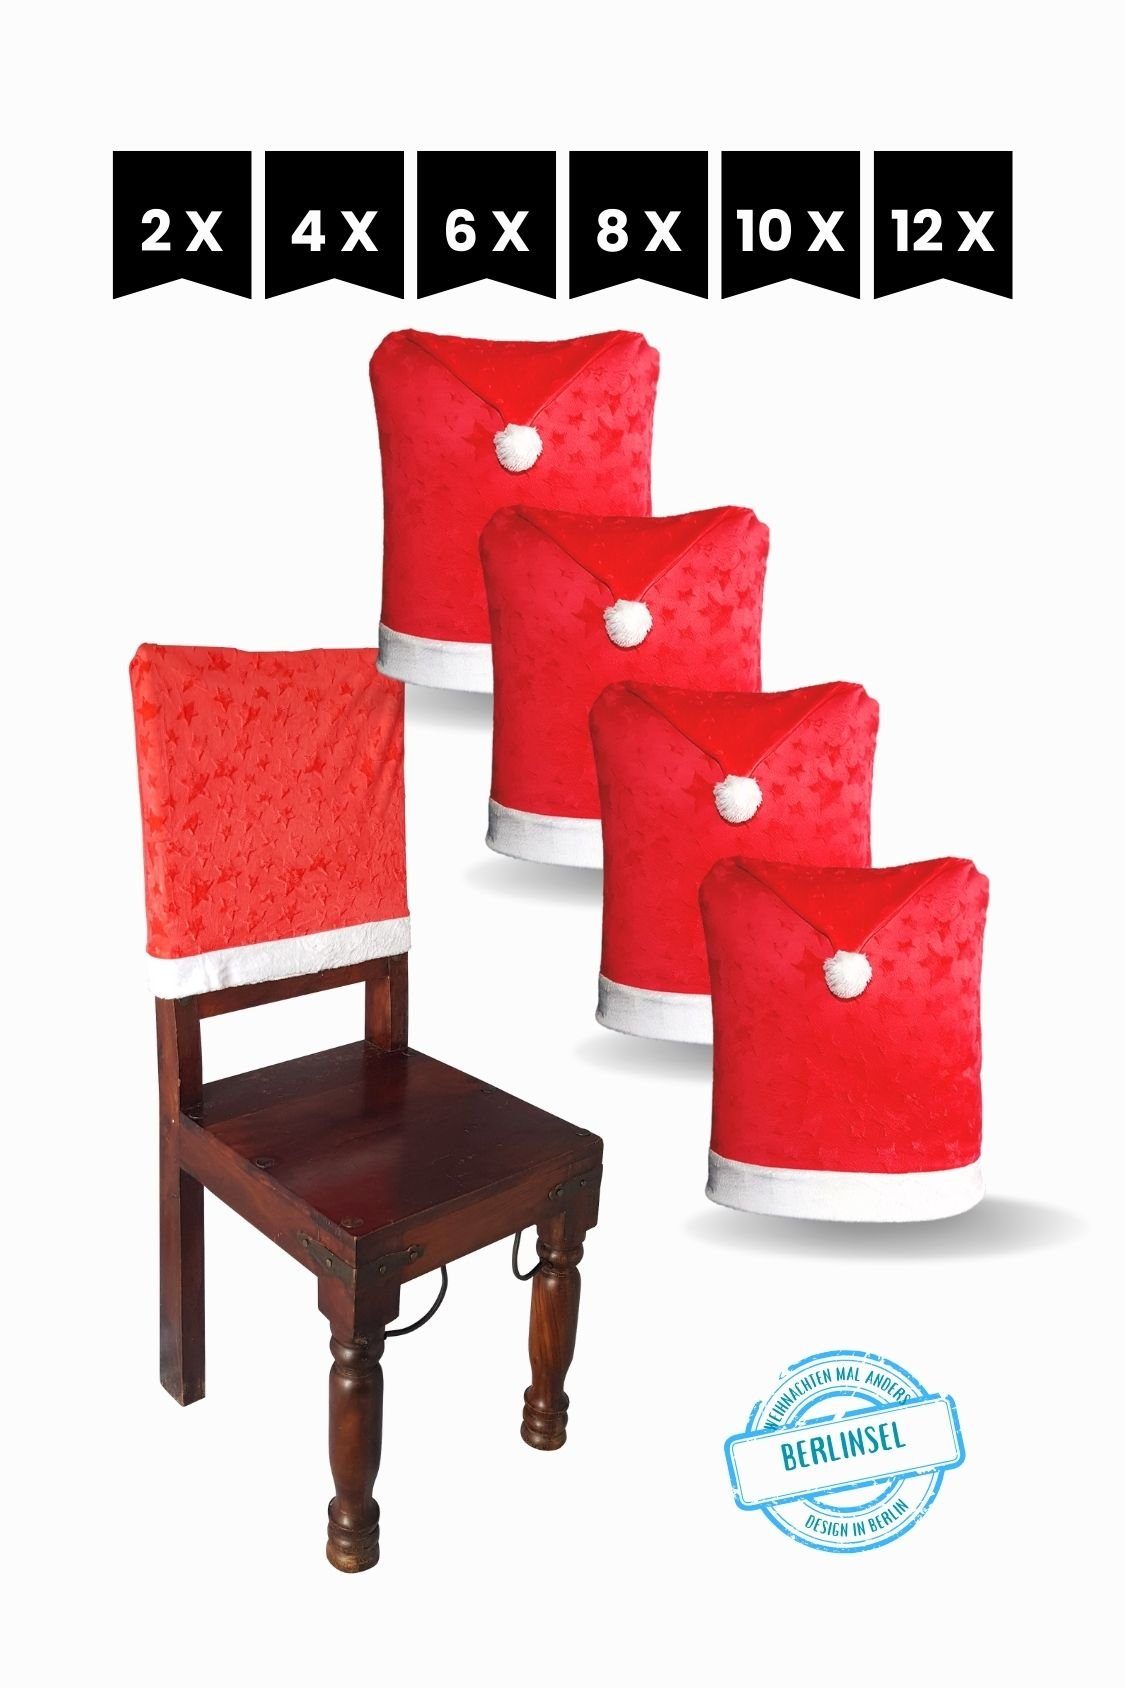 Stuhlhusse Stuhlüberzug im Weihnachtsdesign, Adventsdeko, Stuhlmütze, Berlinsel, passend für fast alle Stuhlgrößen, als 2er,4er,6er,8er,10er & 12er Set